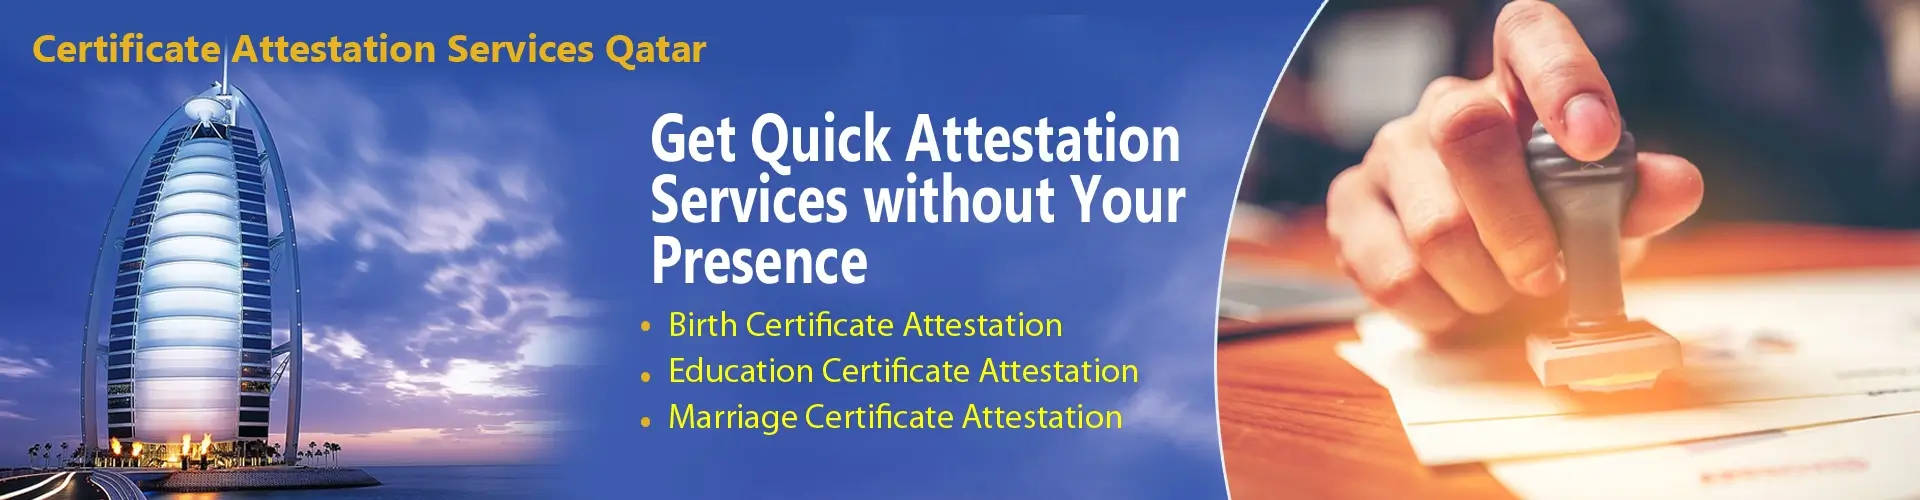 certificate attestation qatar